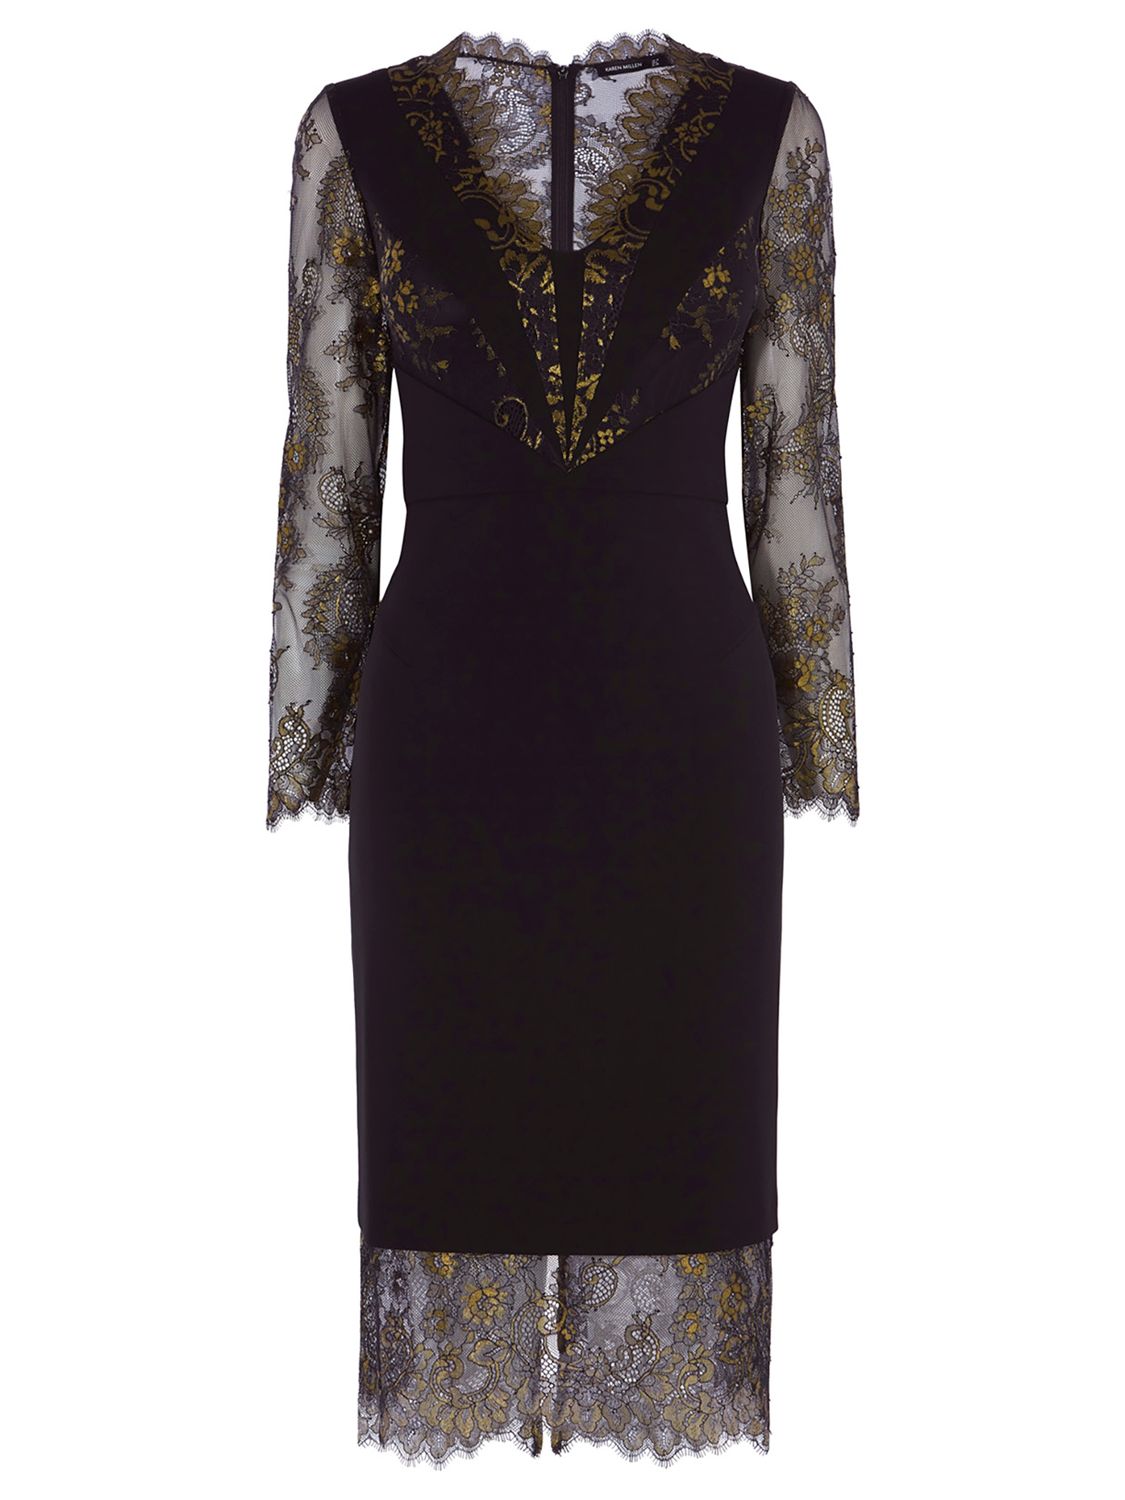 Karen Millen Lingerie Lace Dress, Black/Multi at John Lewis